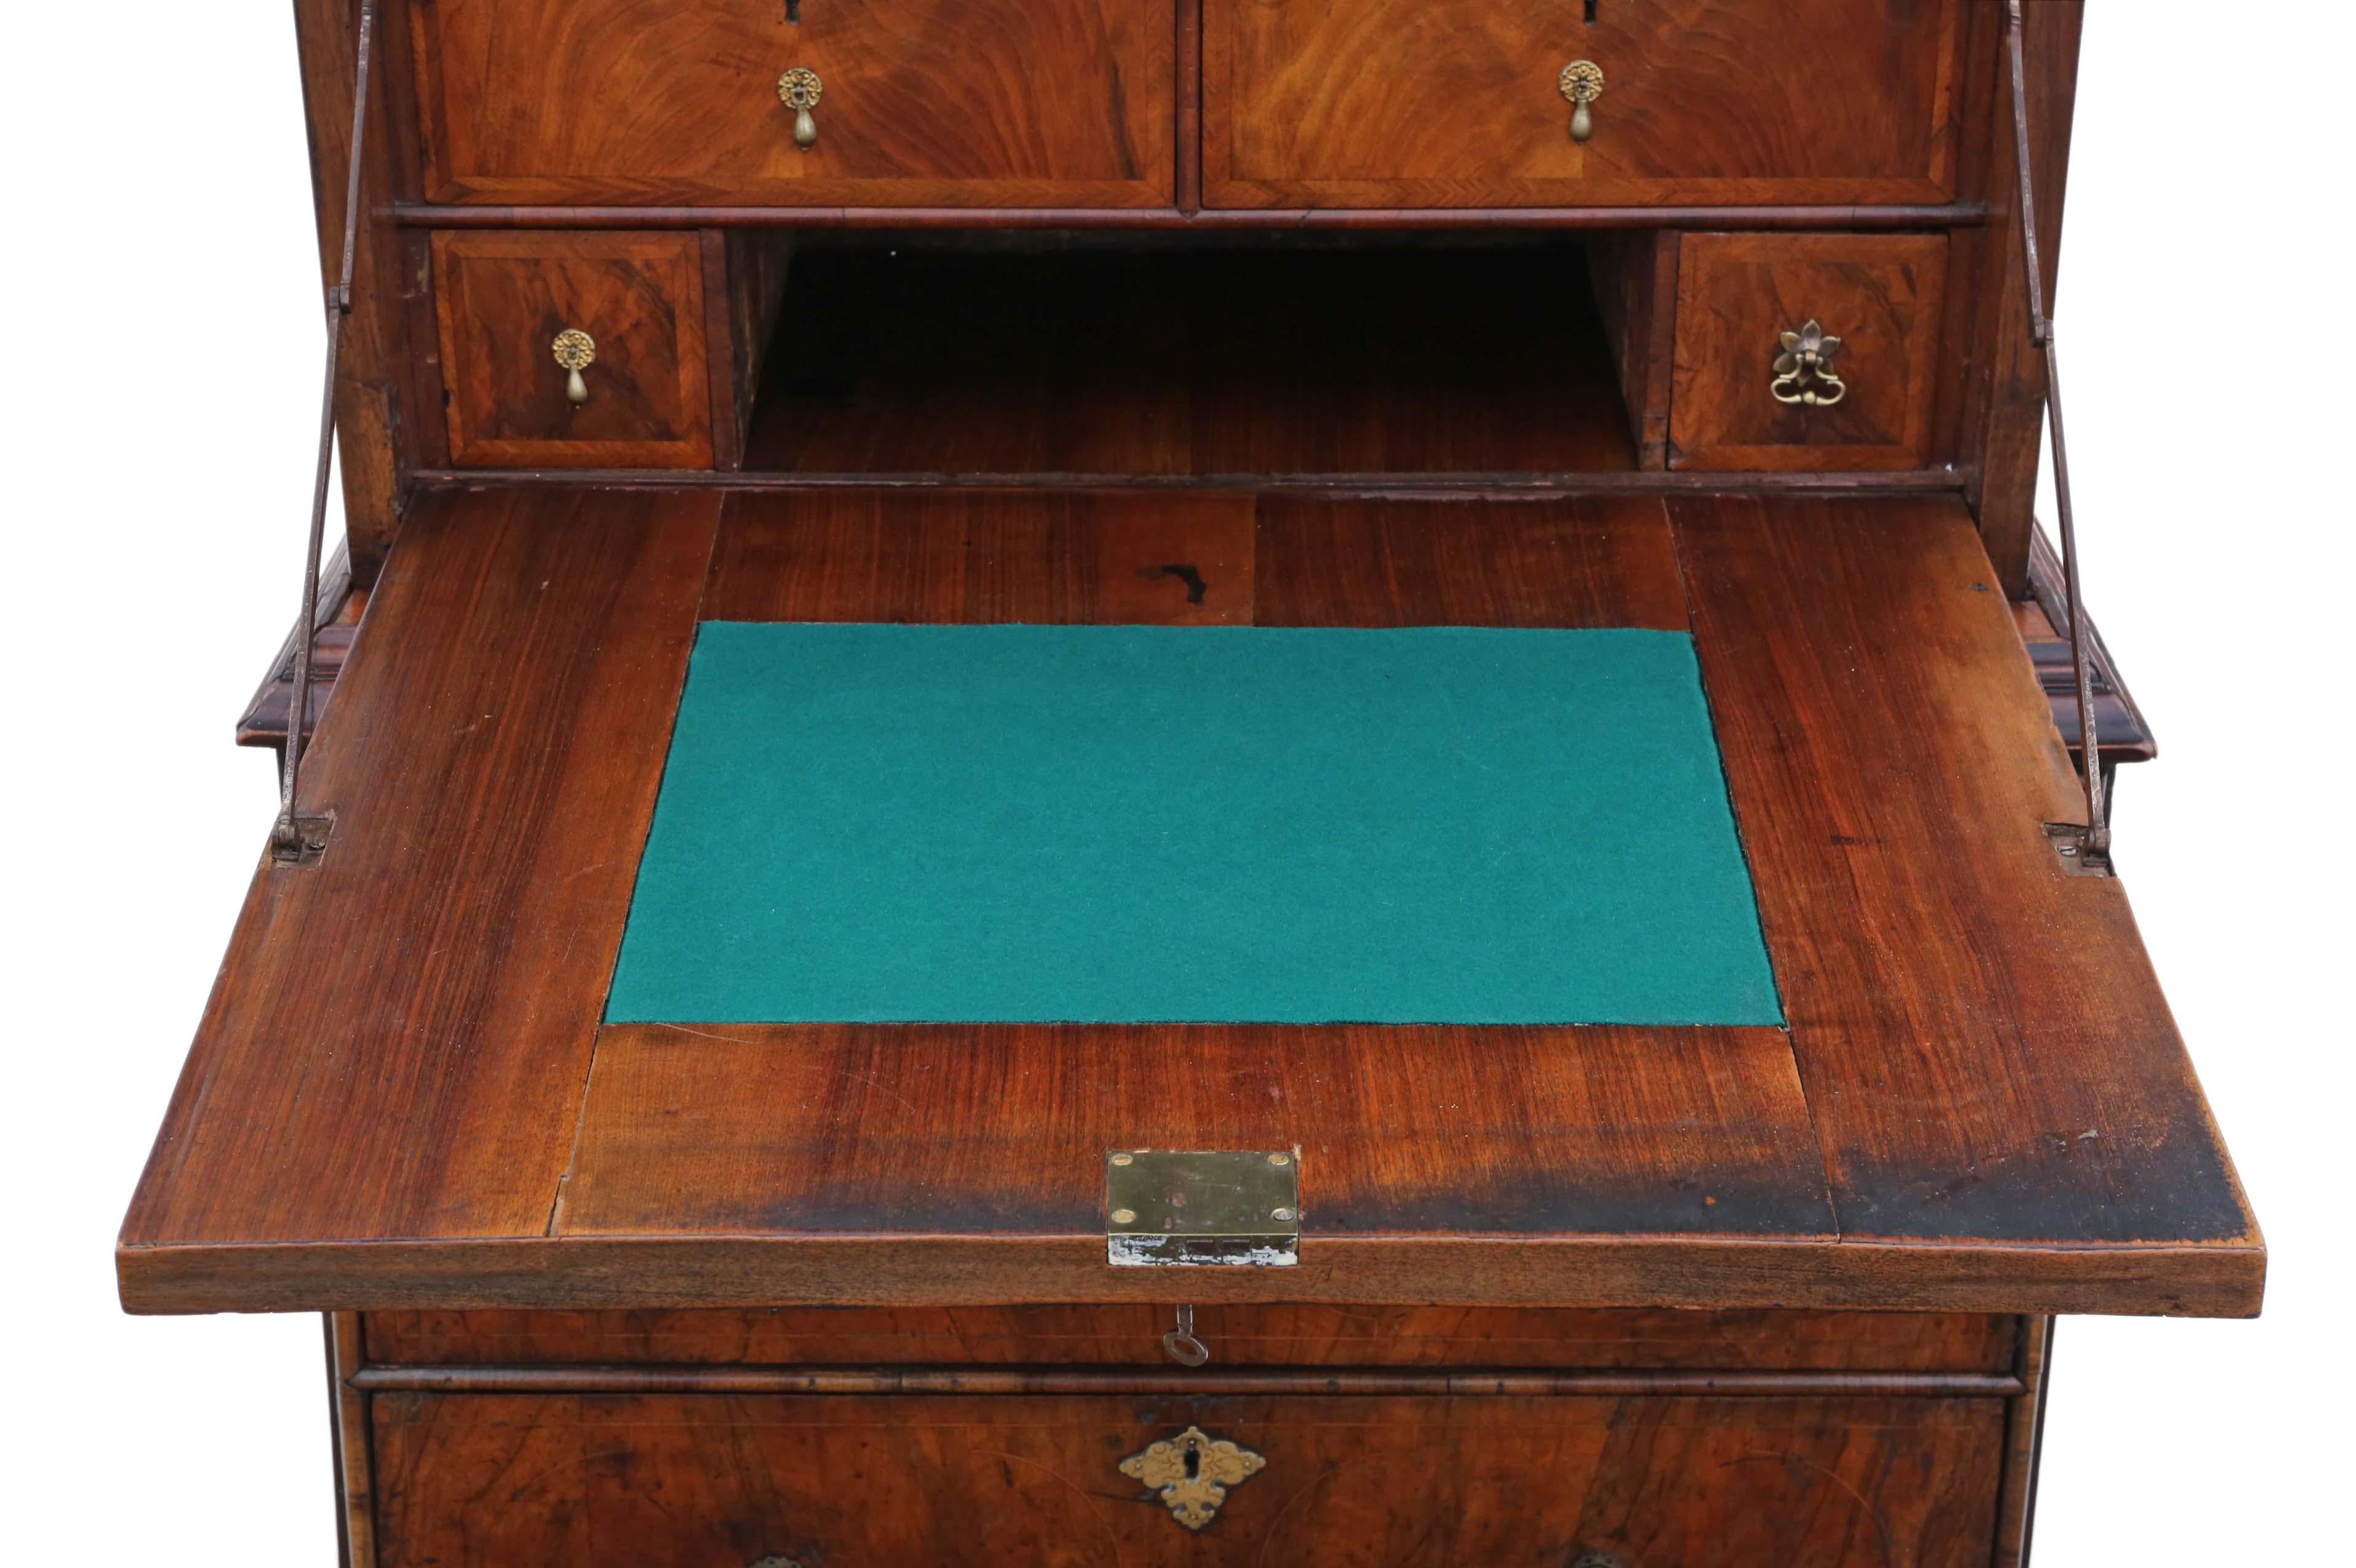 Antique Queen Anne Early 18th Century Inlaid Burr Walnut Escritoire Desk Chest In Good Condition For Sale In Wisbech, Cambridgeshire